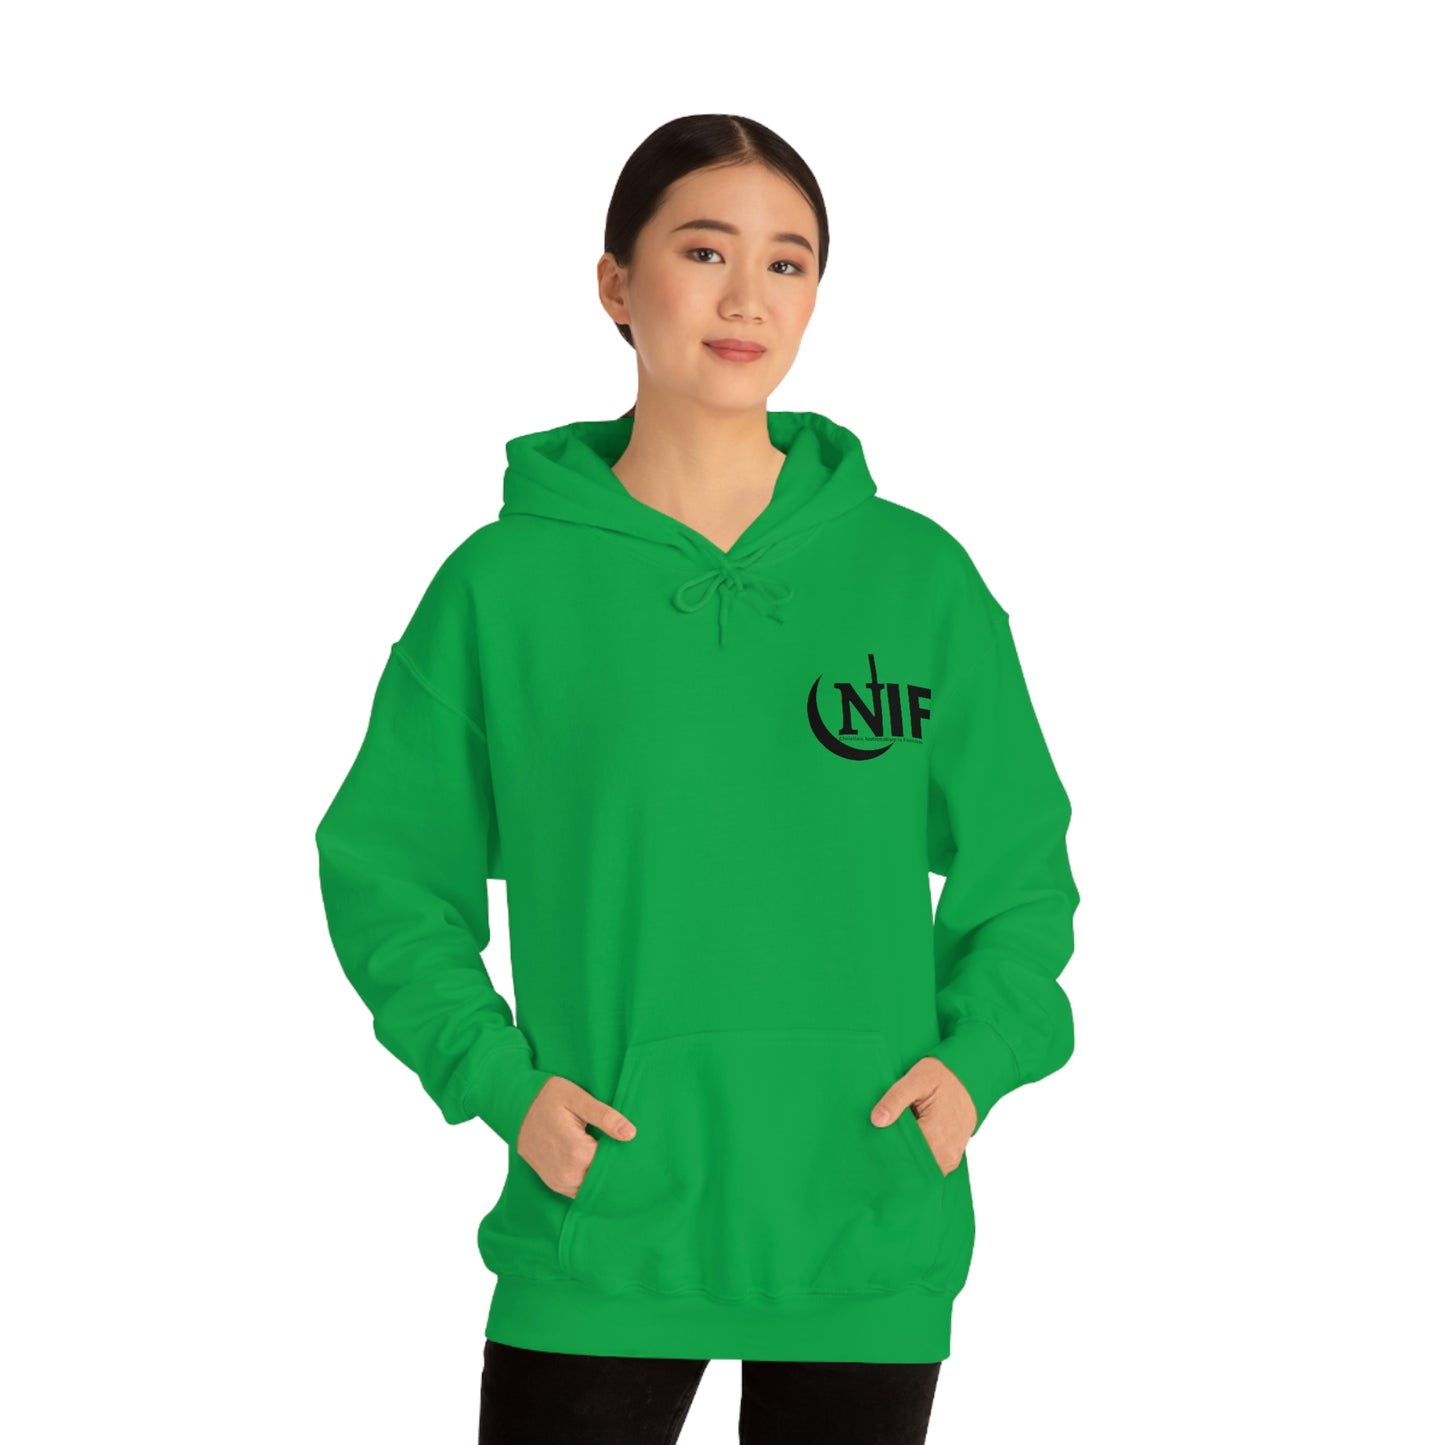 CNIF Christian Nationalism is Fascism (dark font) Unisex Heavy Blend™ Hooded Sweatshirt